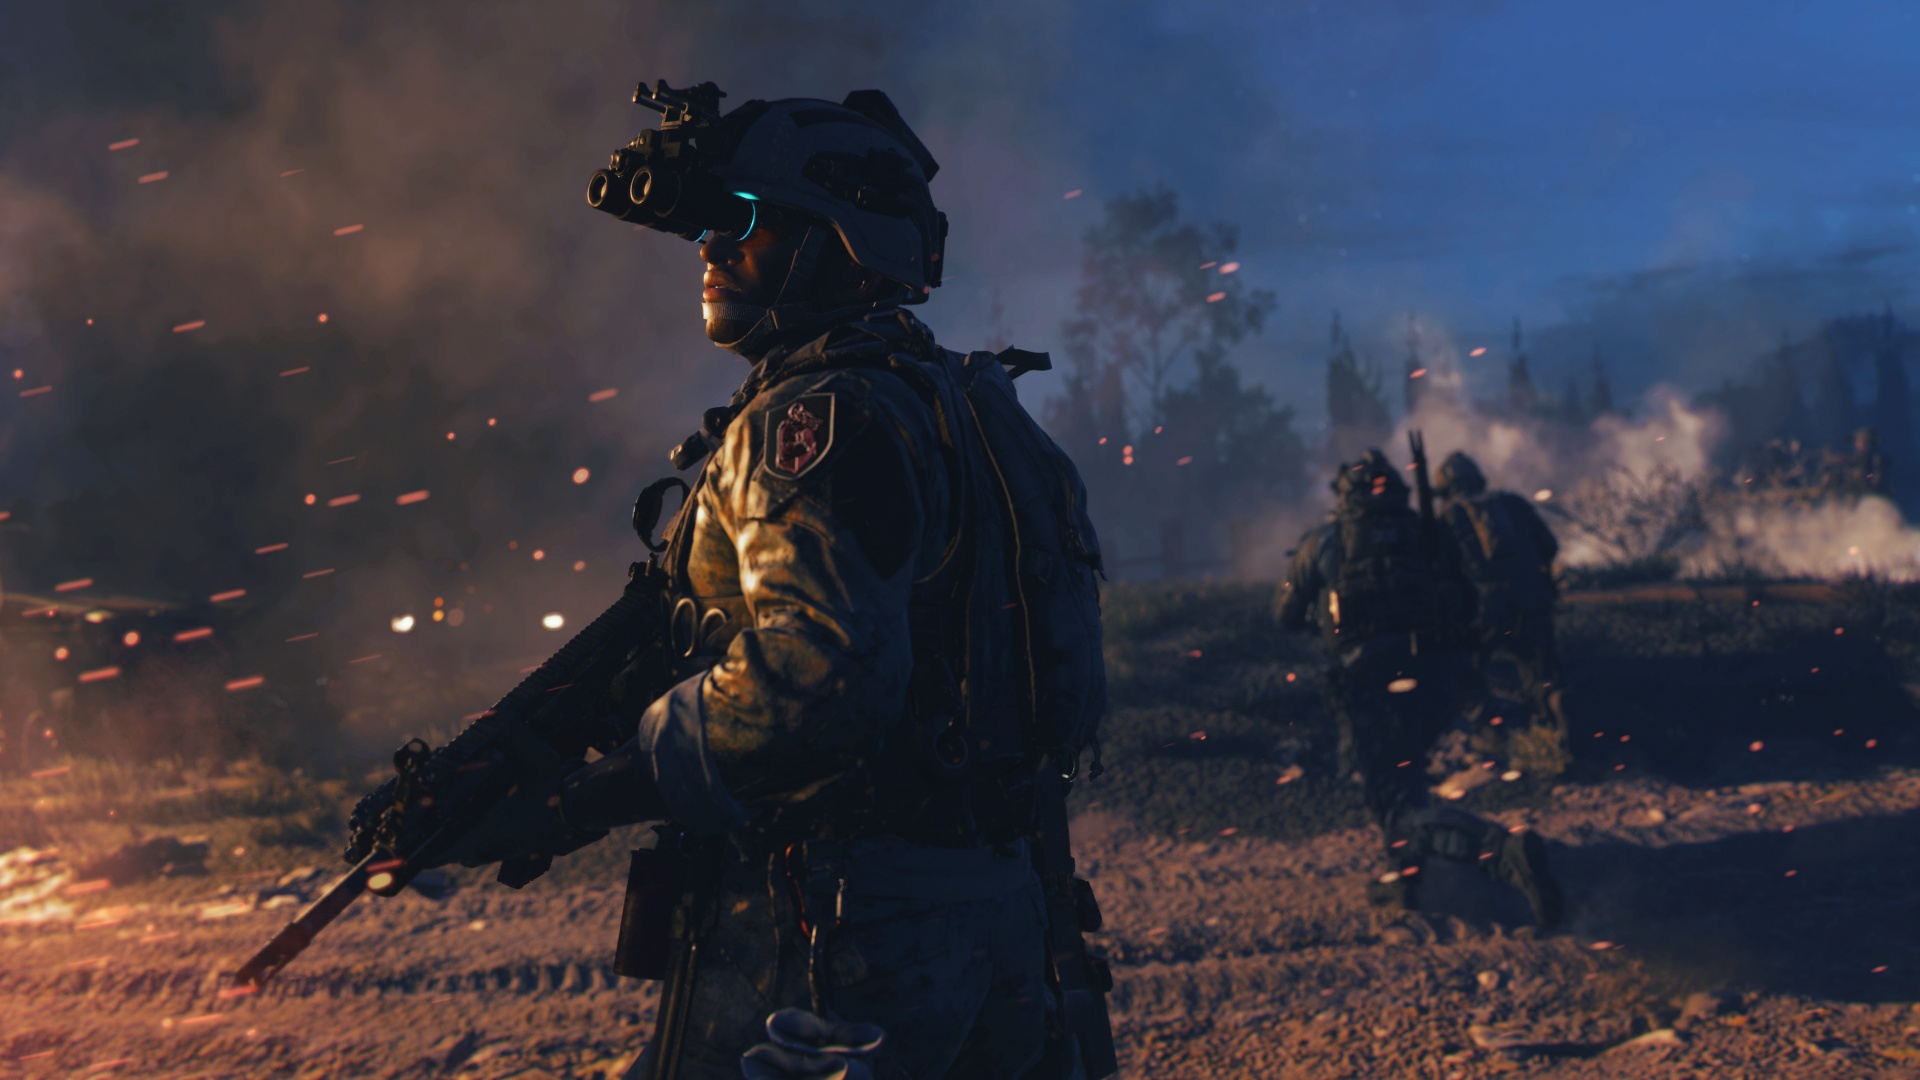 Call of Duty®: Modern Warfare® II Launch — Everything You Need to